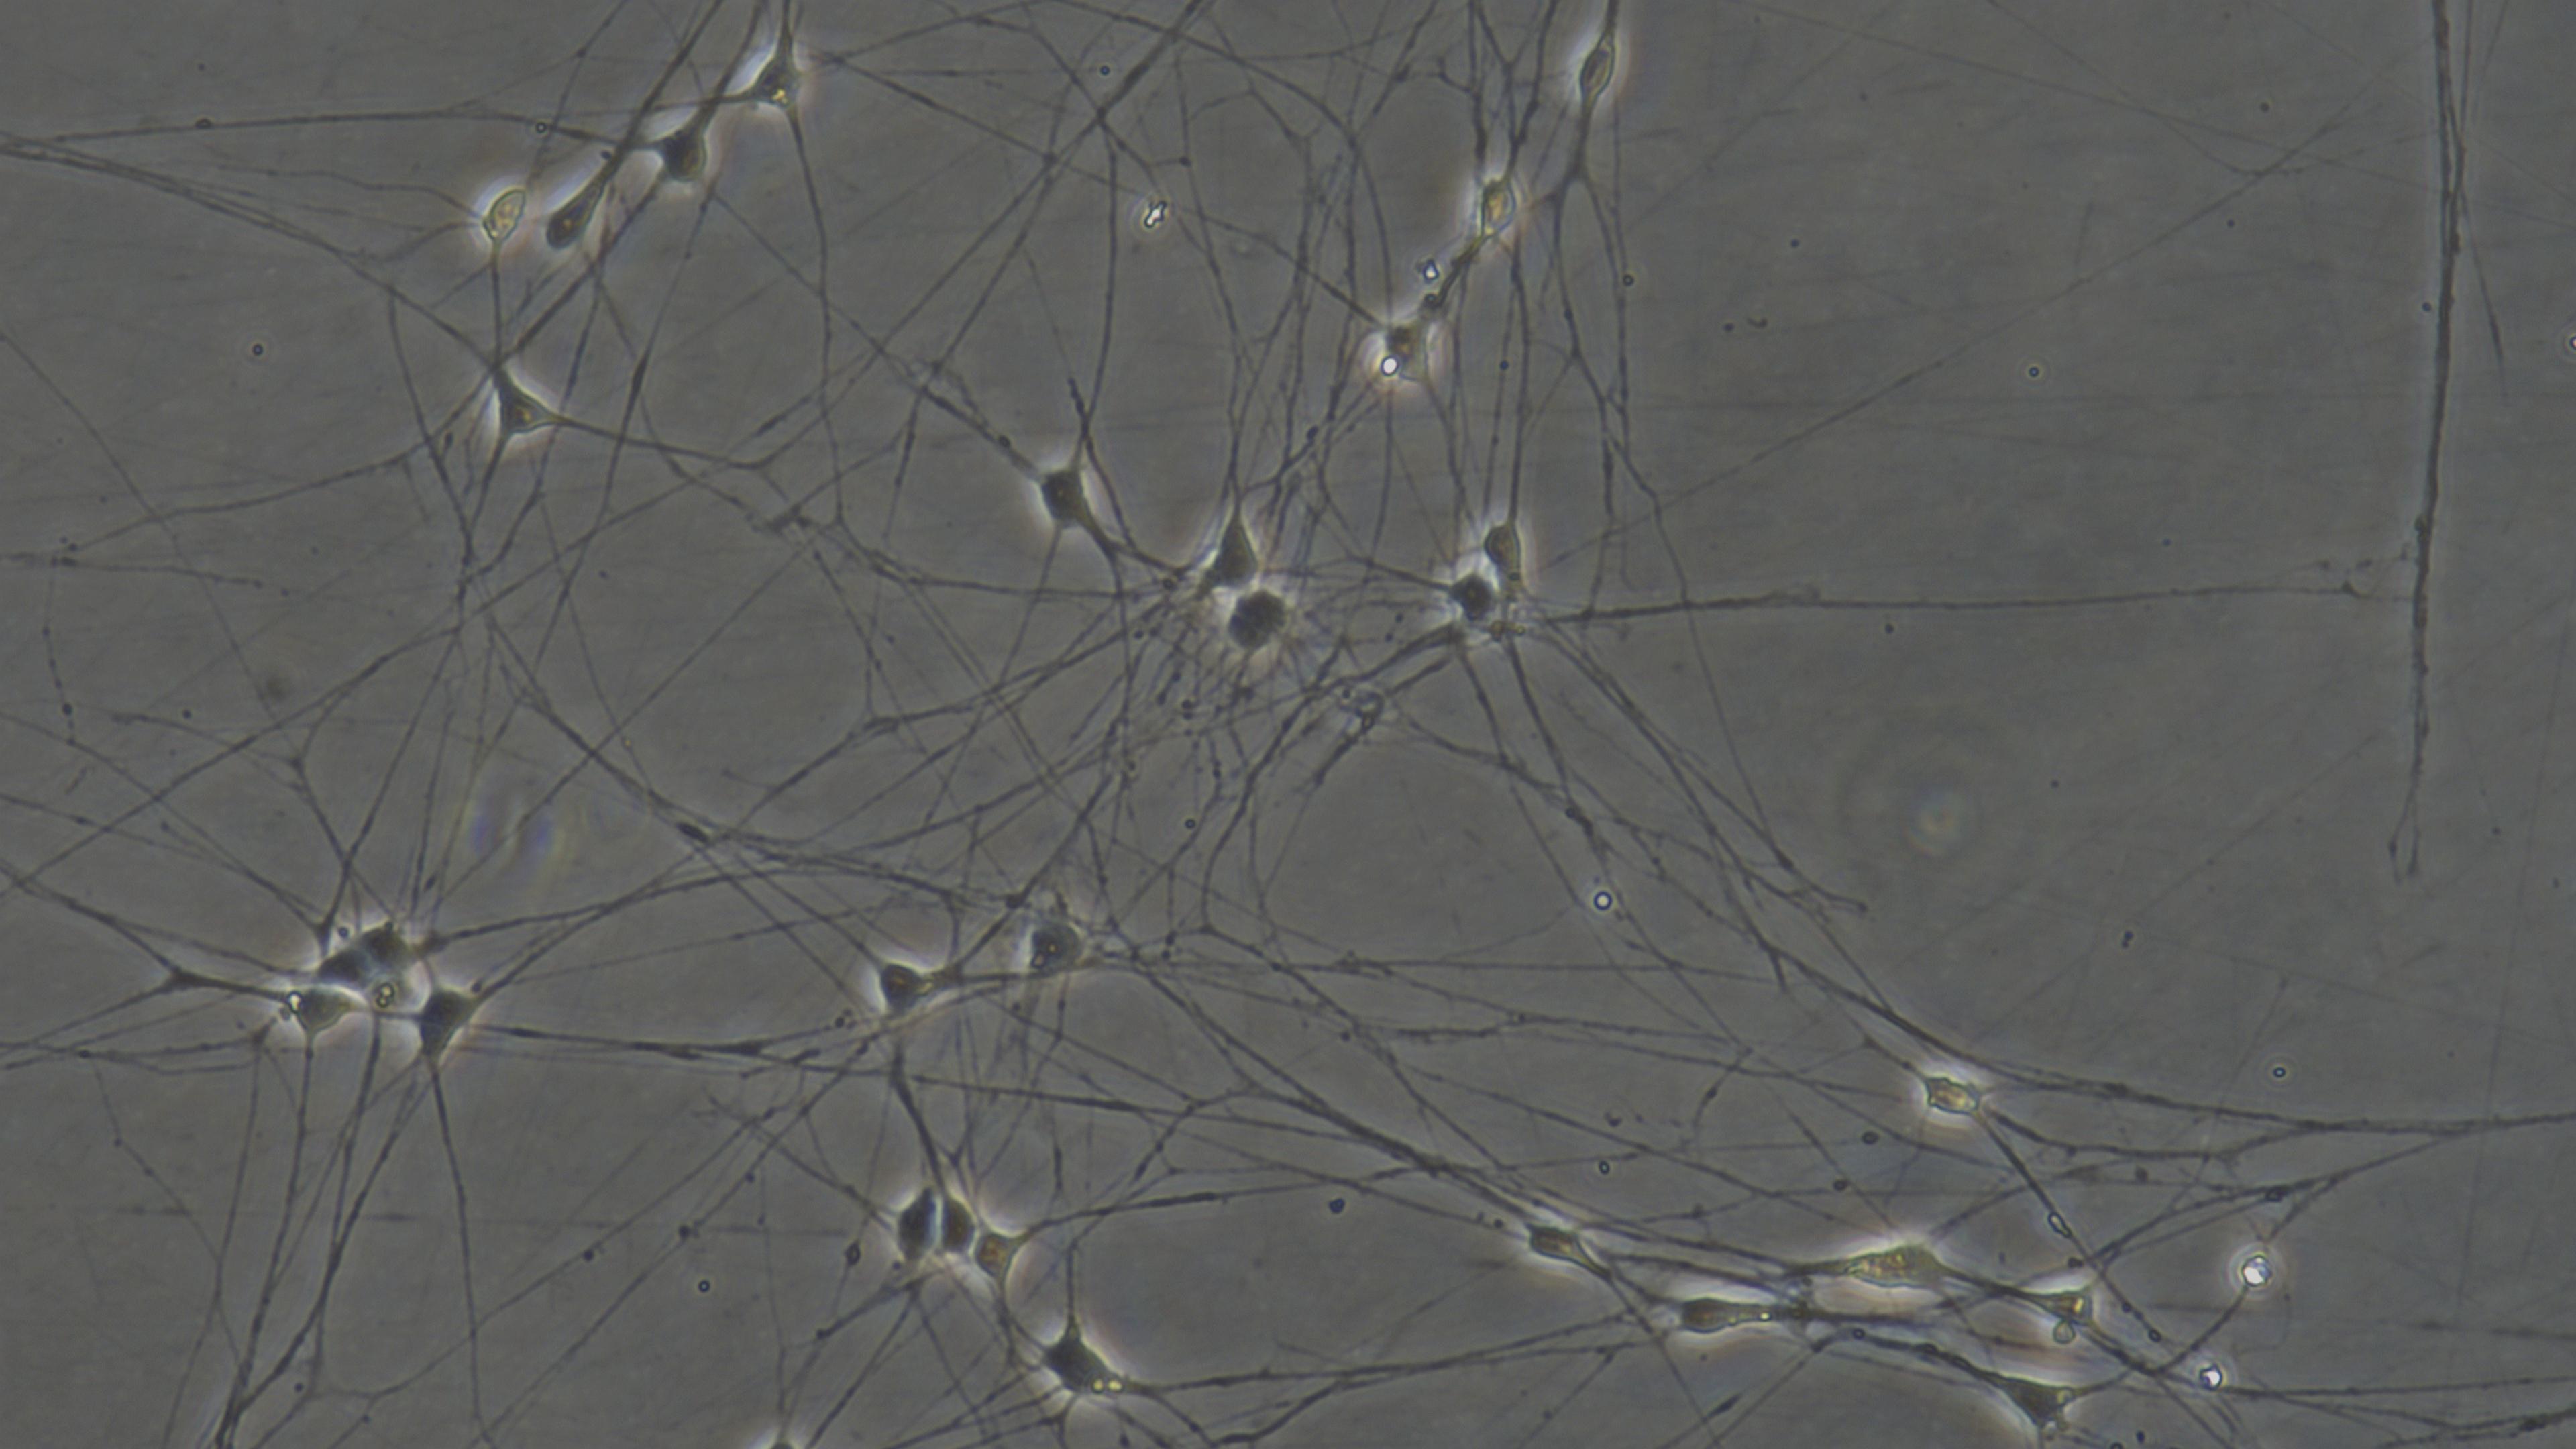 Primary Rat Trigeminal ganglion neuron cells (TGN)